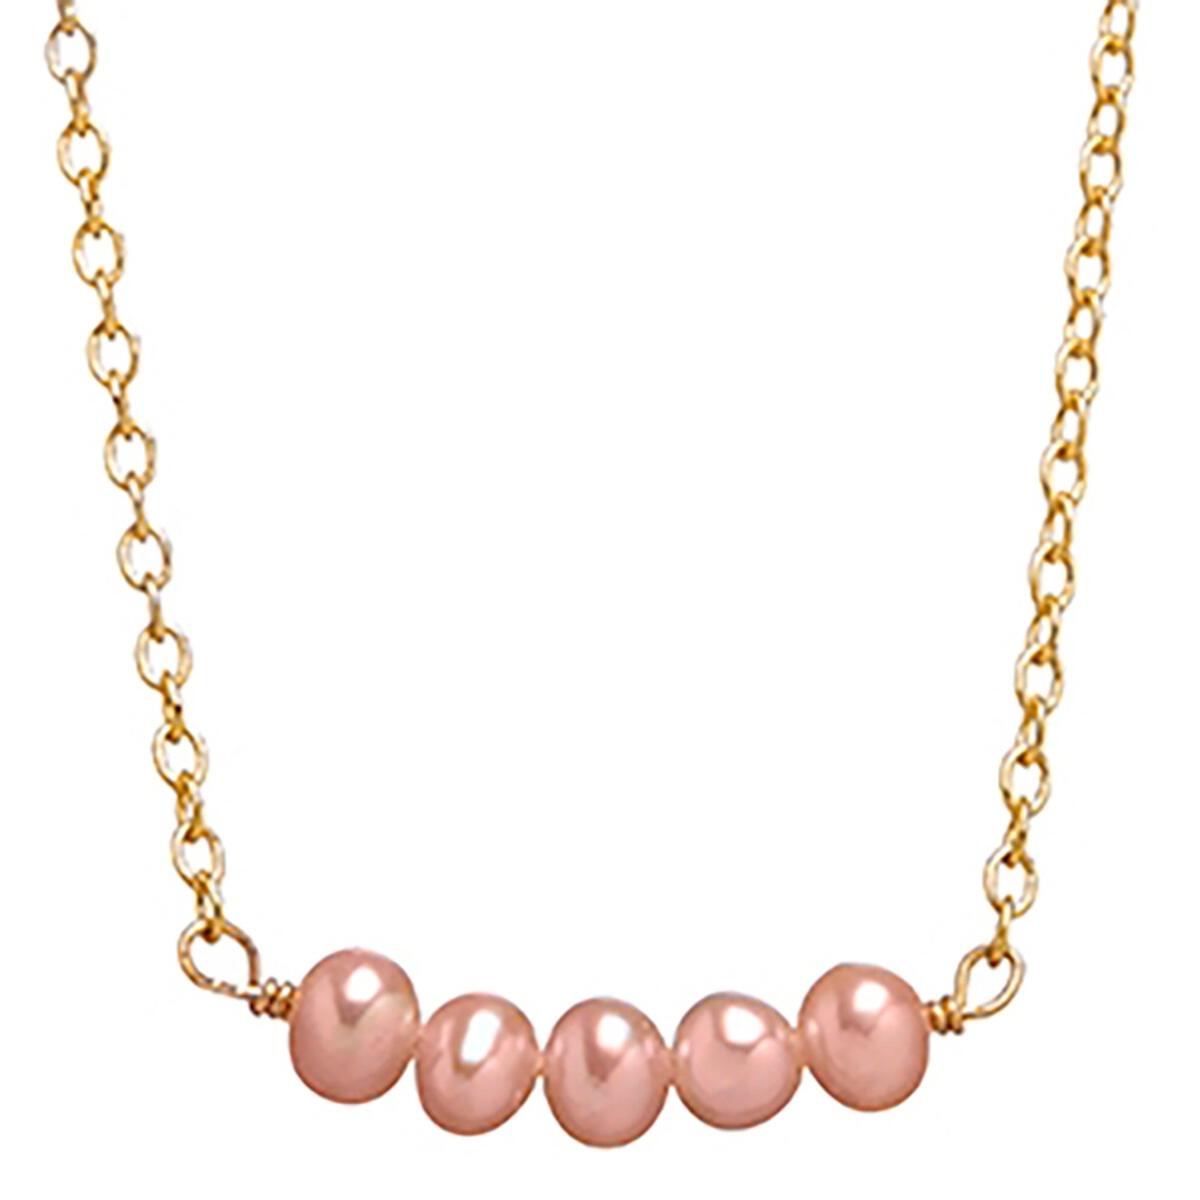 Bottleblond pearl necklace